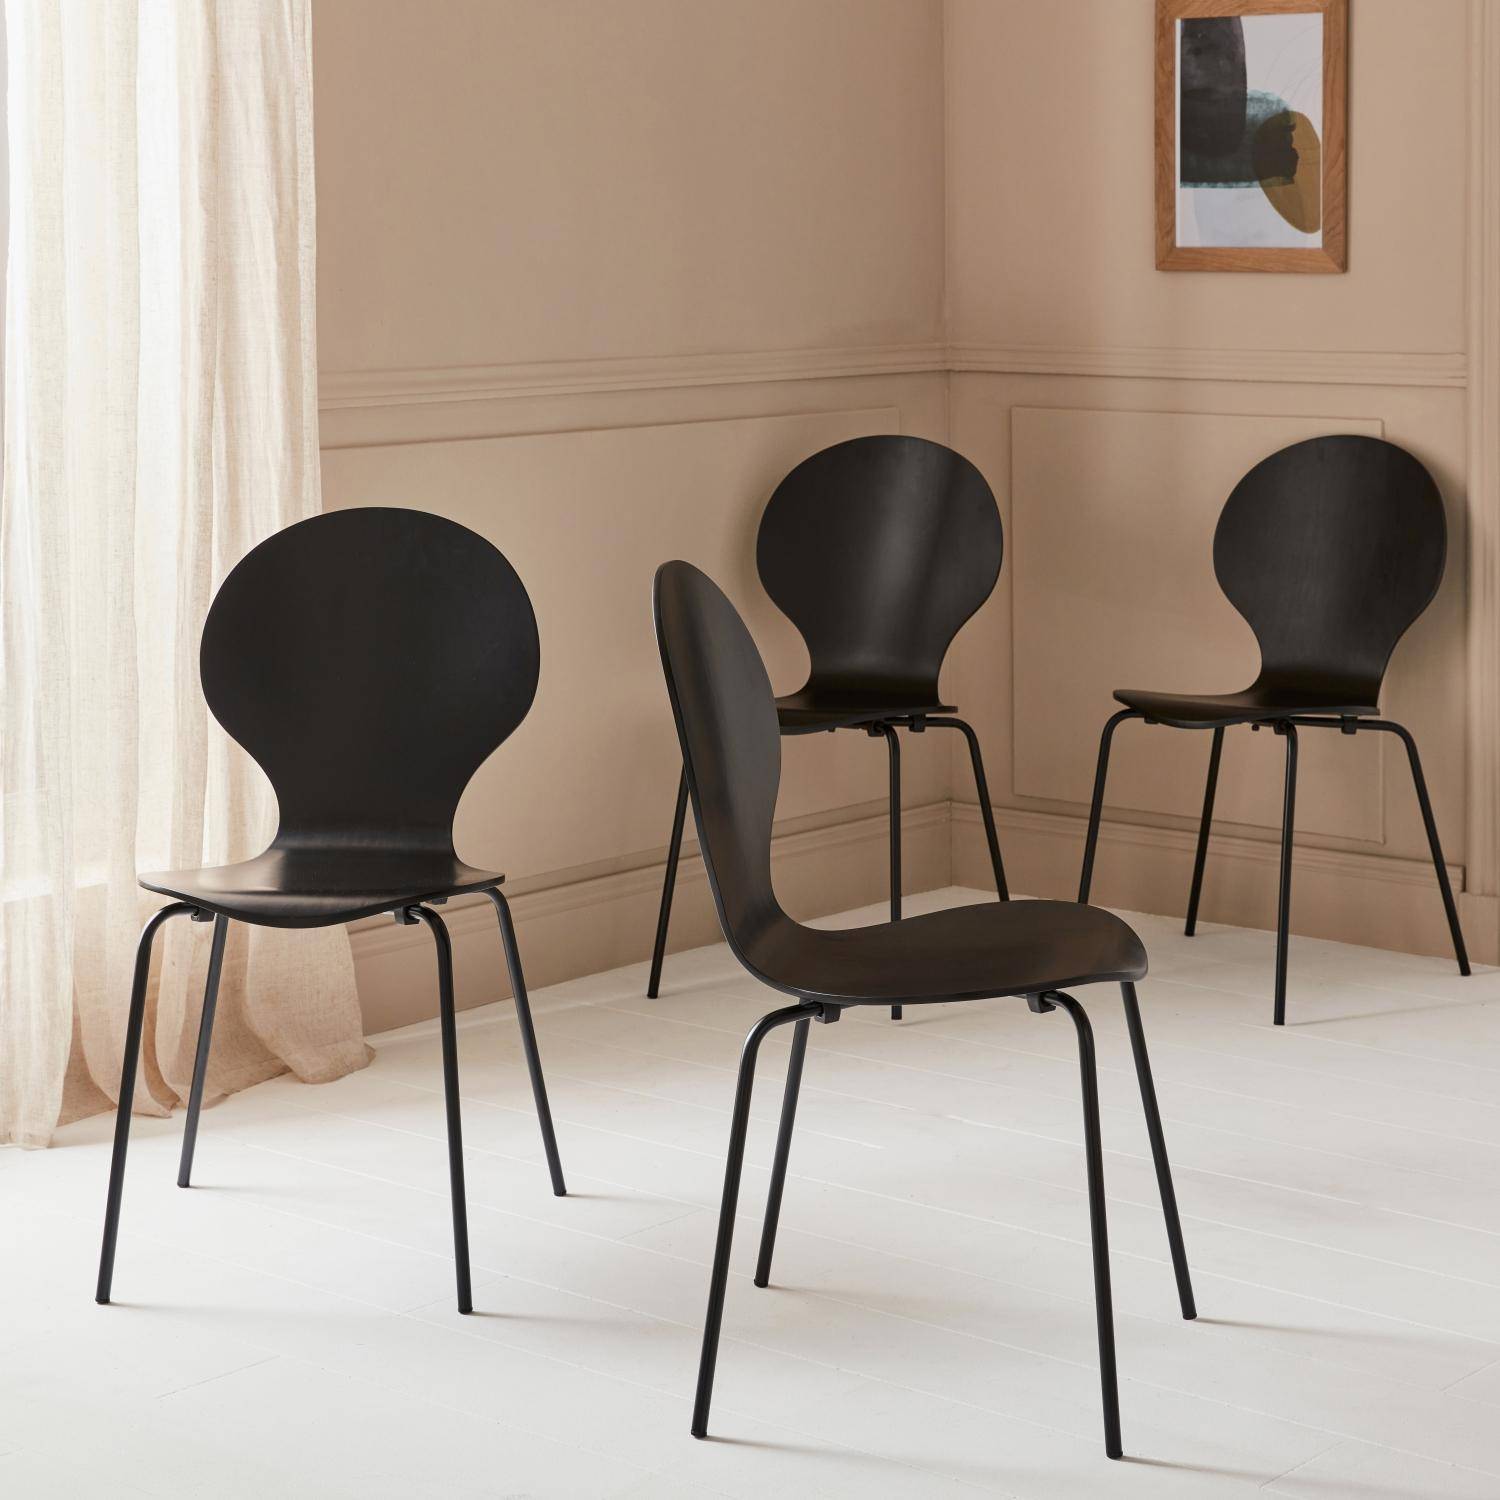 Set van 4 zwarte retro stapelstoelen, hevea hout en multiplex, stalen poten, Naomi, B 43 x D 48 x H 87cm,sweeek,Photo1